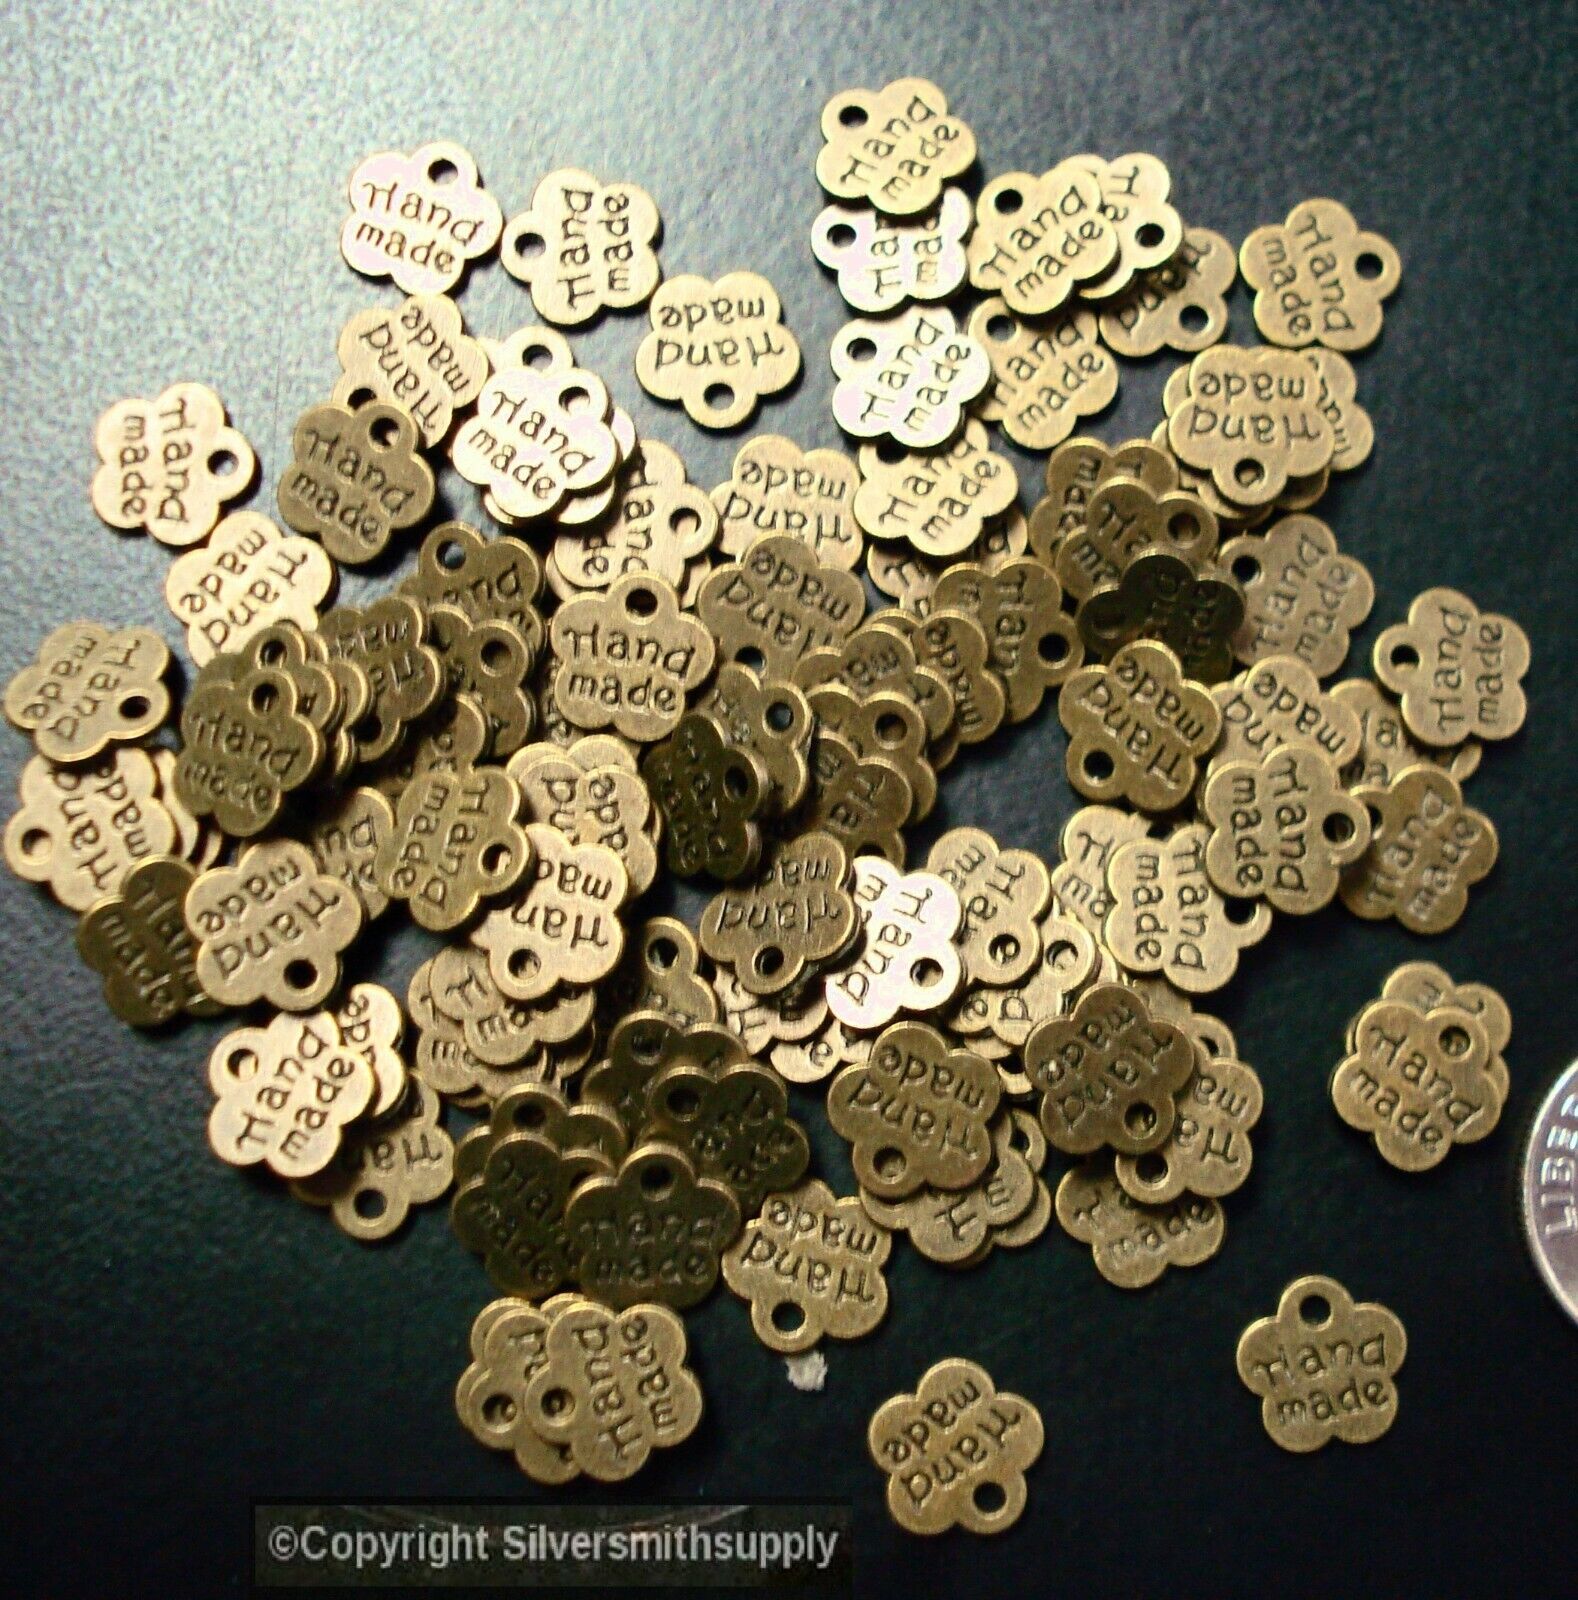 100 Jewelry tags "handmade" 9mm antique bronze plated signature tags CFP074  Silversmithsupply.com - фотография #3